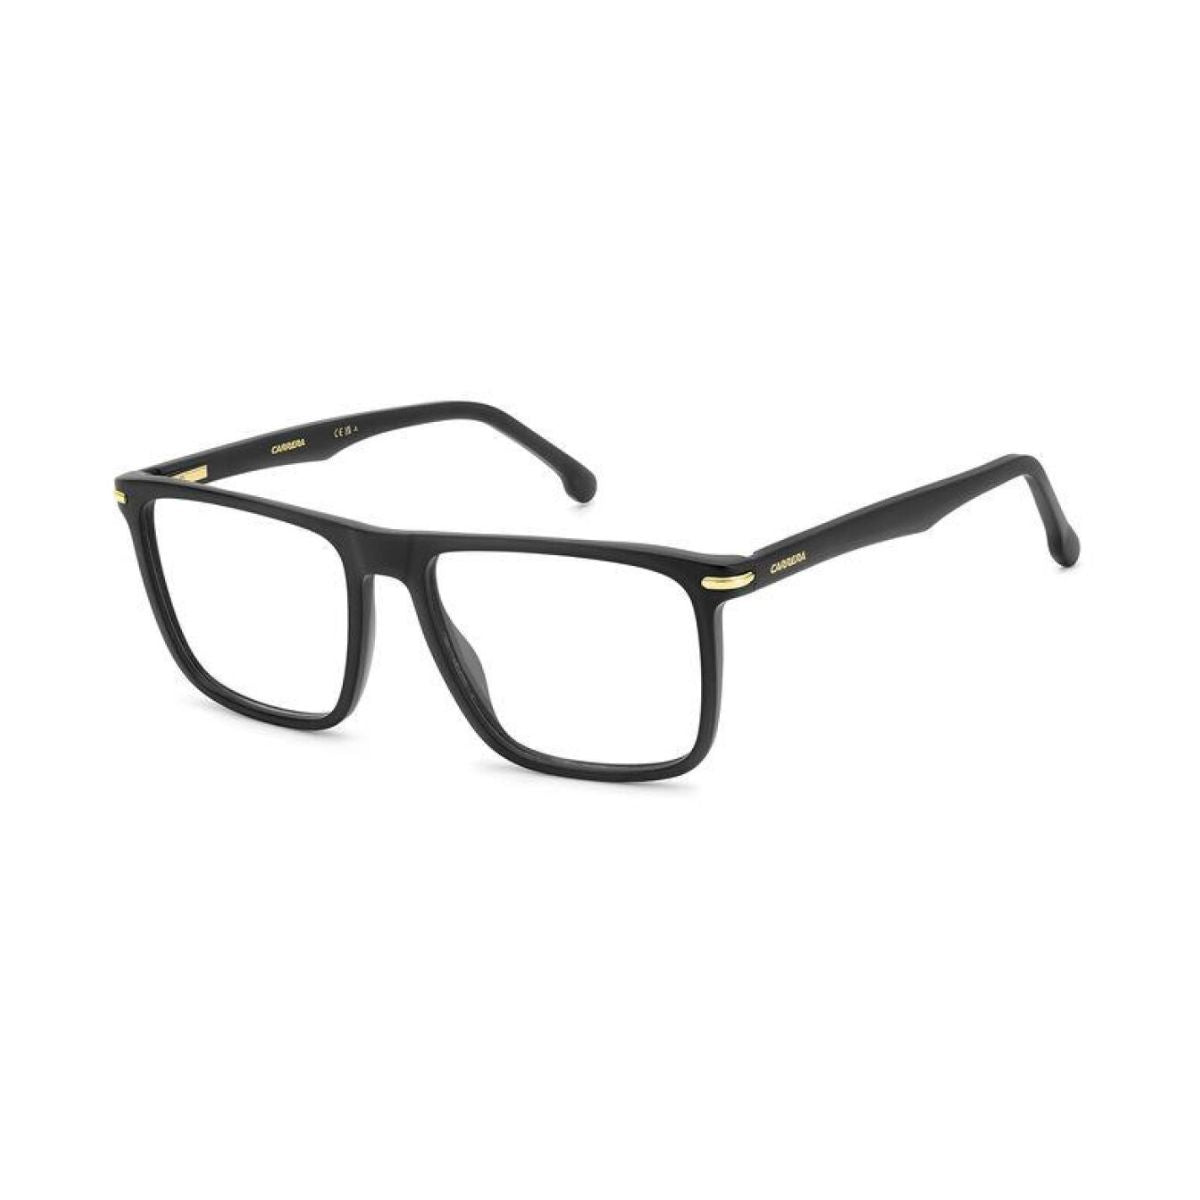 "shop Carrera 319 003 prescription eyeglasses frame for men's online at optorium"